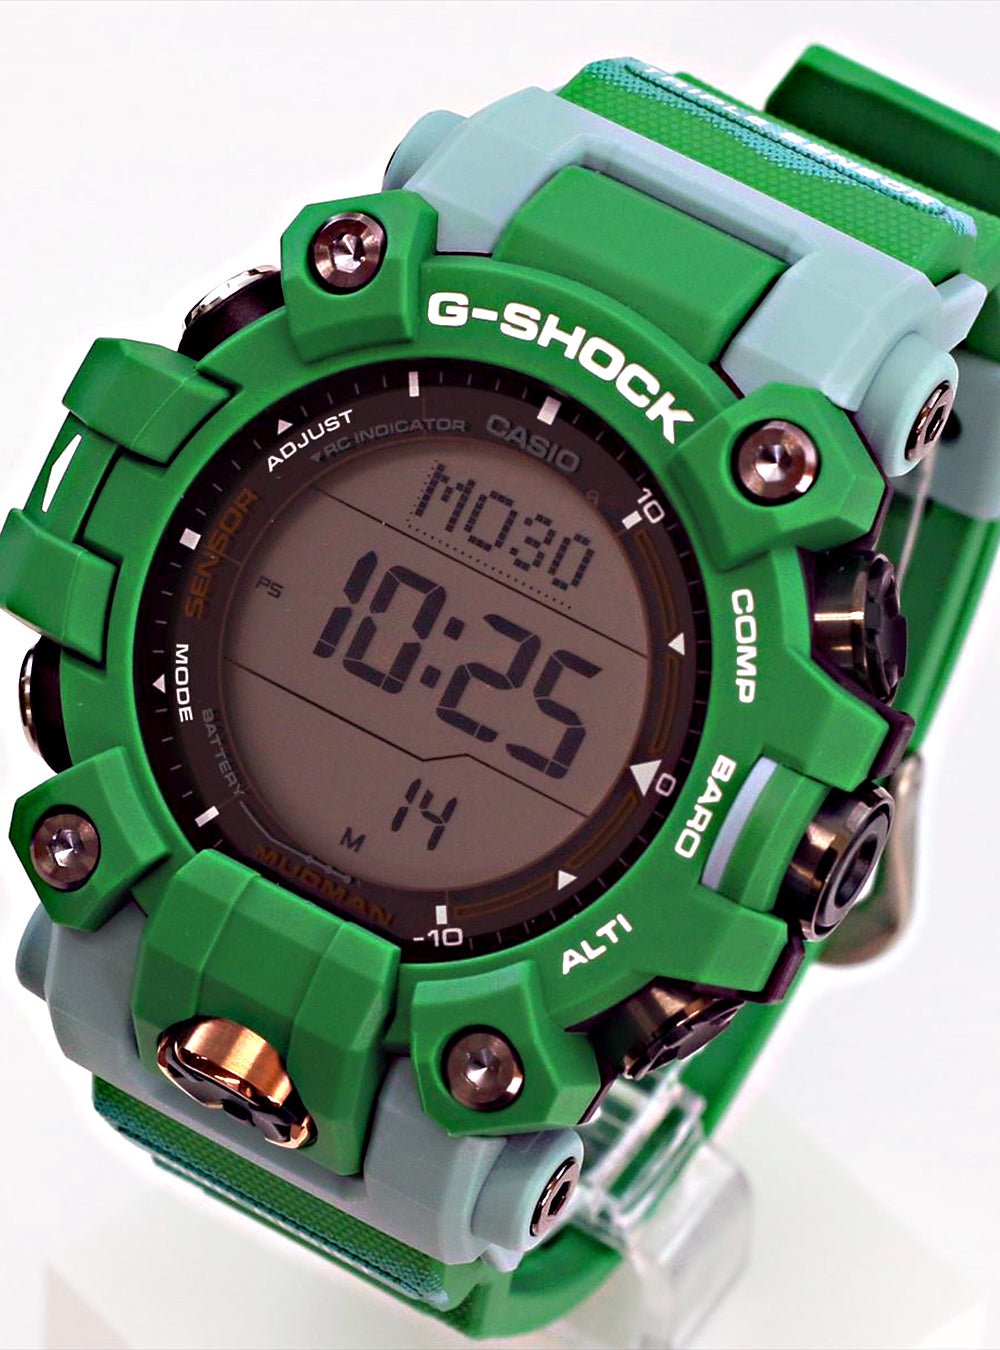 Casio G-Shock Mudman GW-9500 Tough Solar - Military Green GW-9500-3ER -  First Class Watches™ IRL